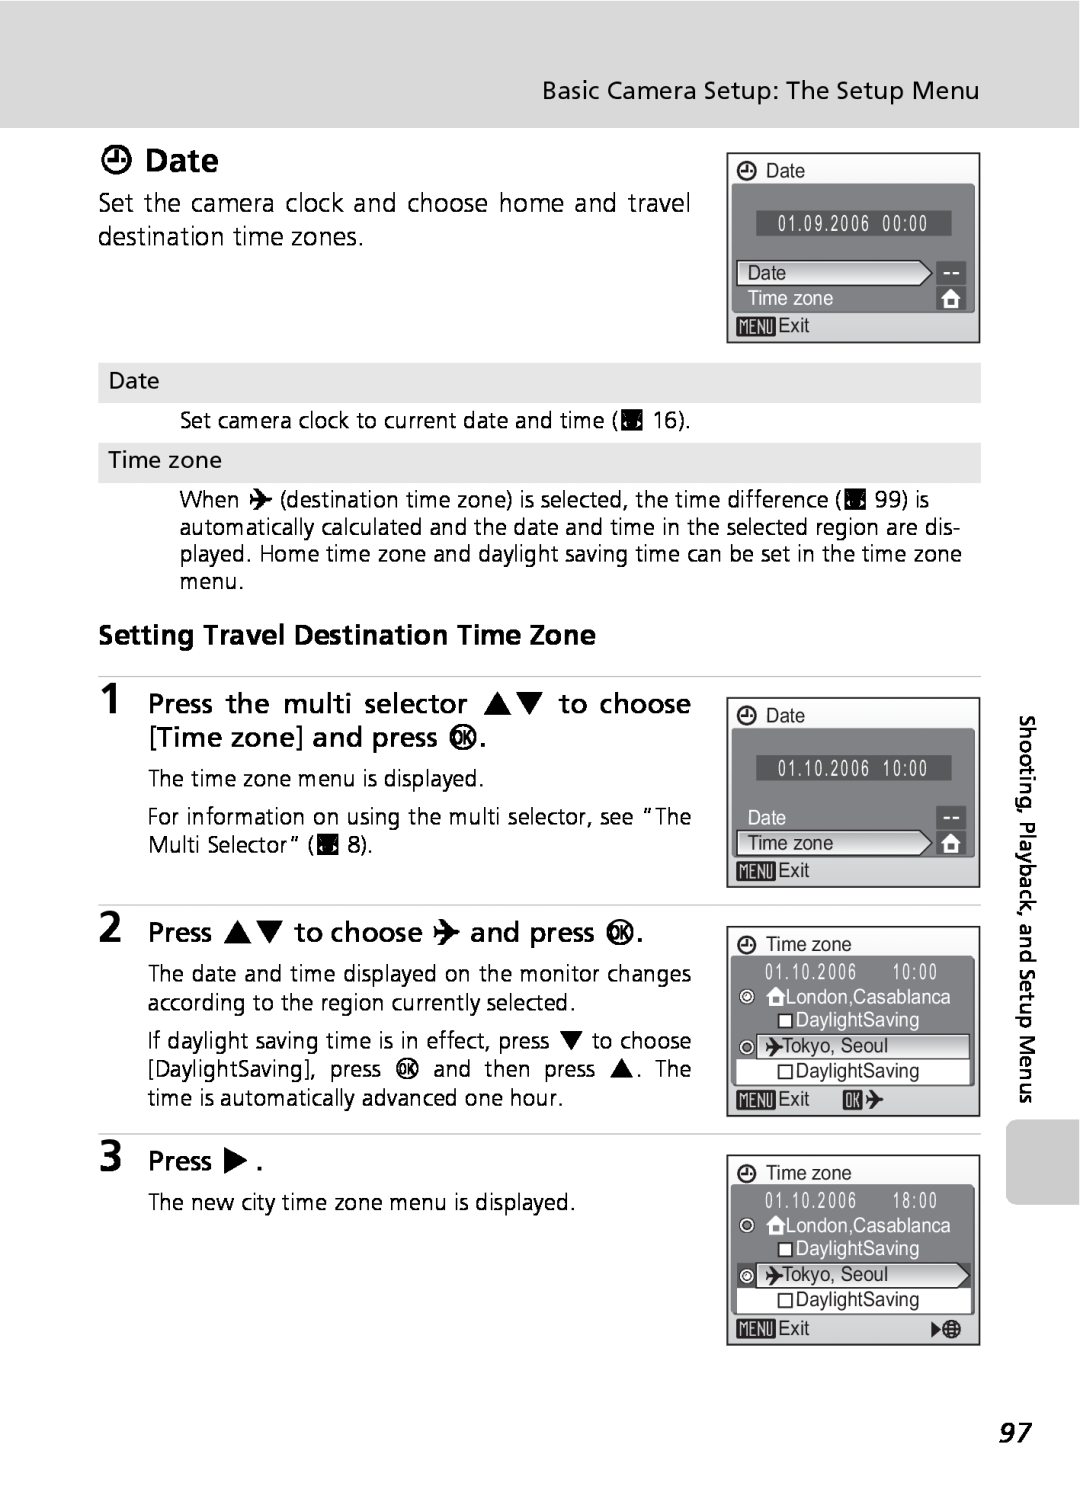 Nikon COOLPIXS9 manual WDate, Setting Travel Destination Time Zone, Press GH to choose Y and press d, Press J 